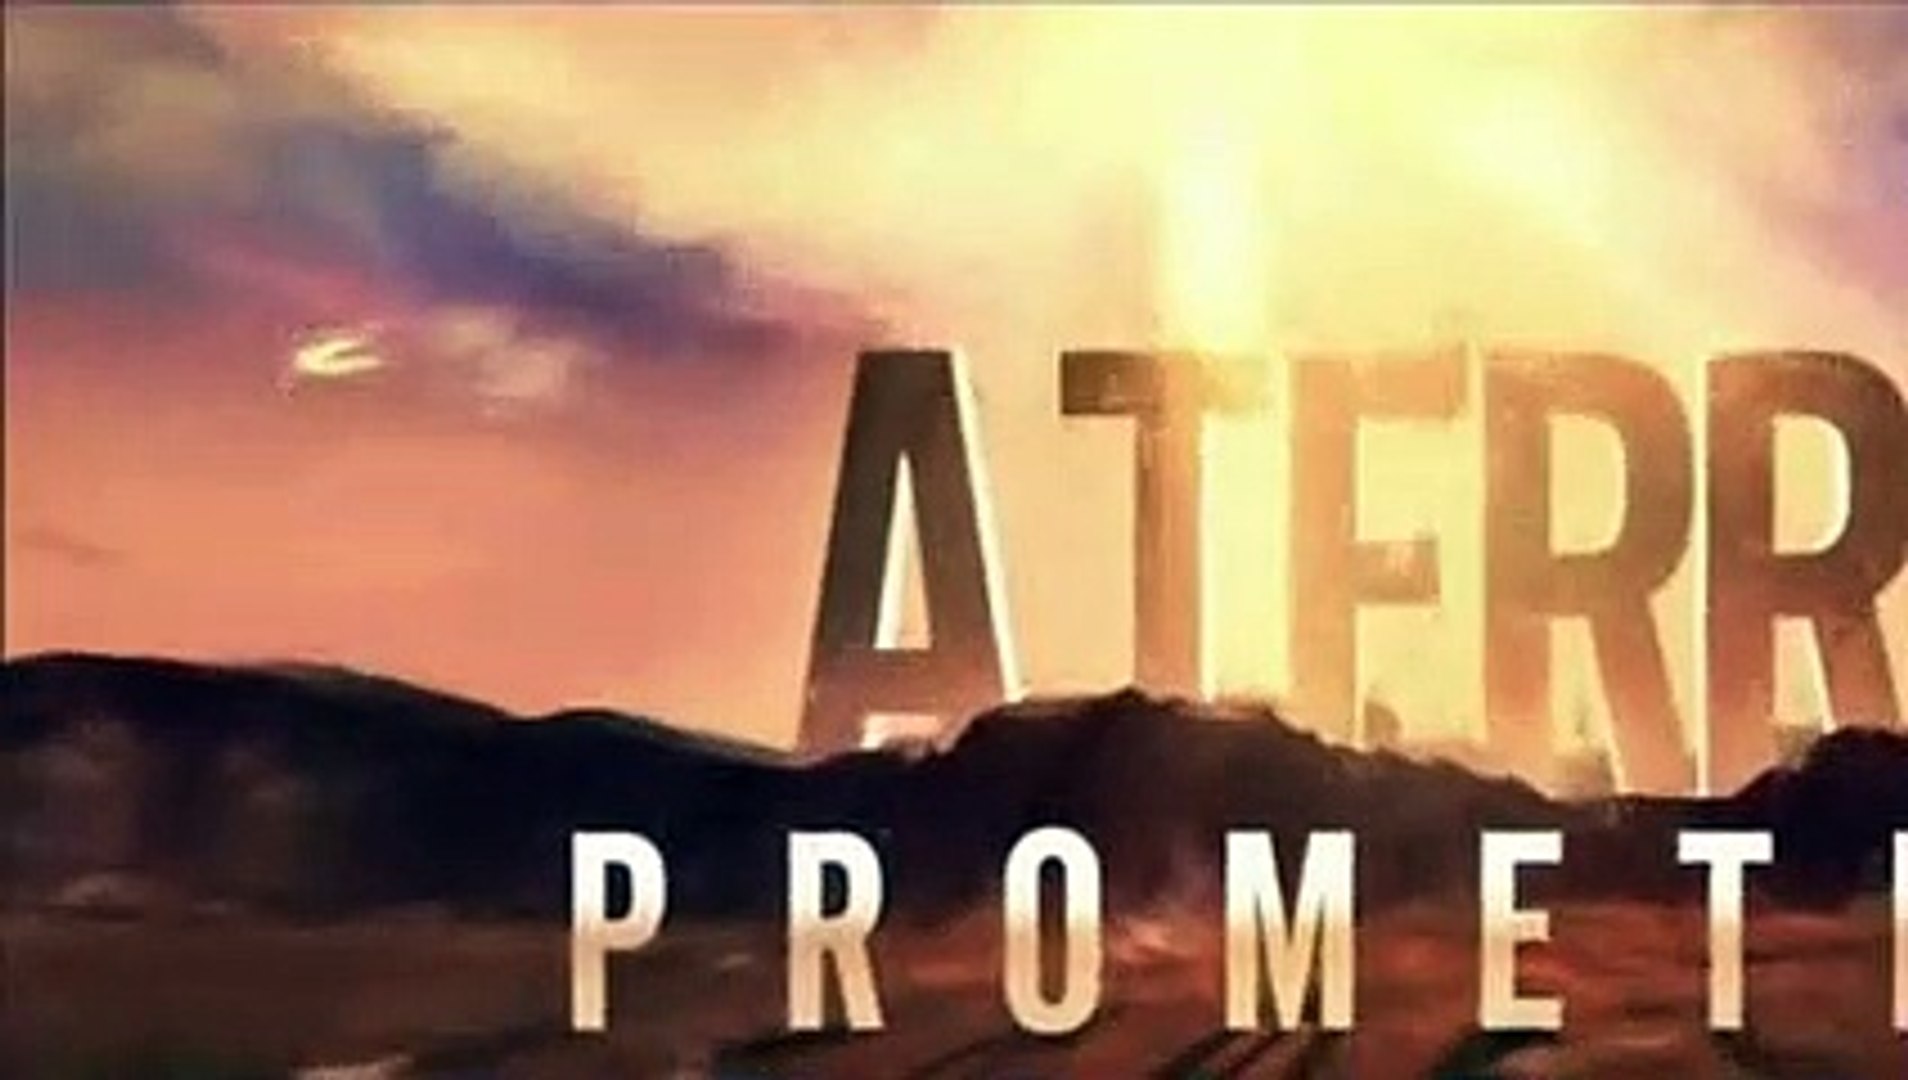 A Terra Prometida Capitulo 156 Completo na integra - Vídeo Dailymotion